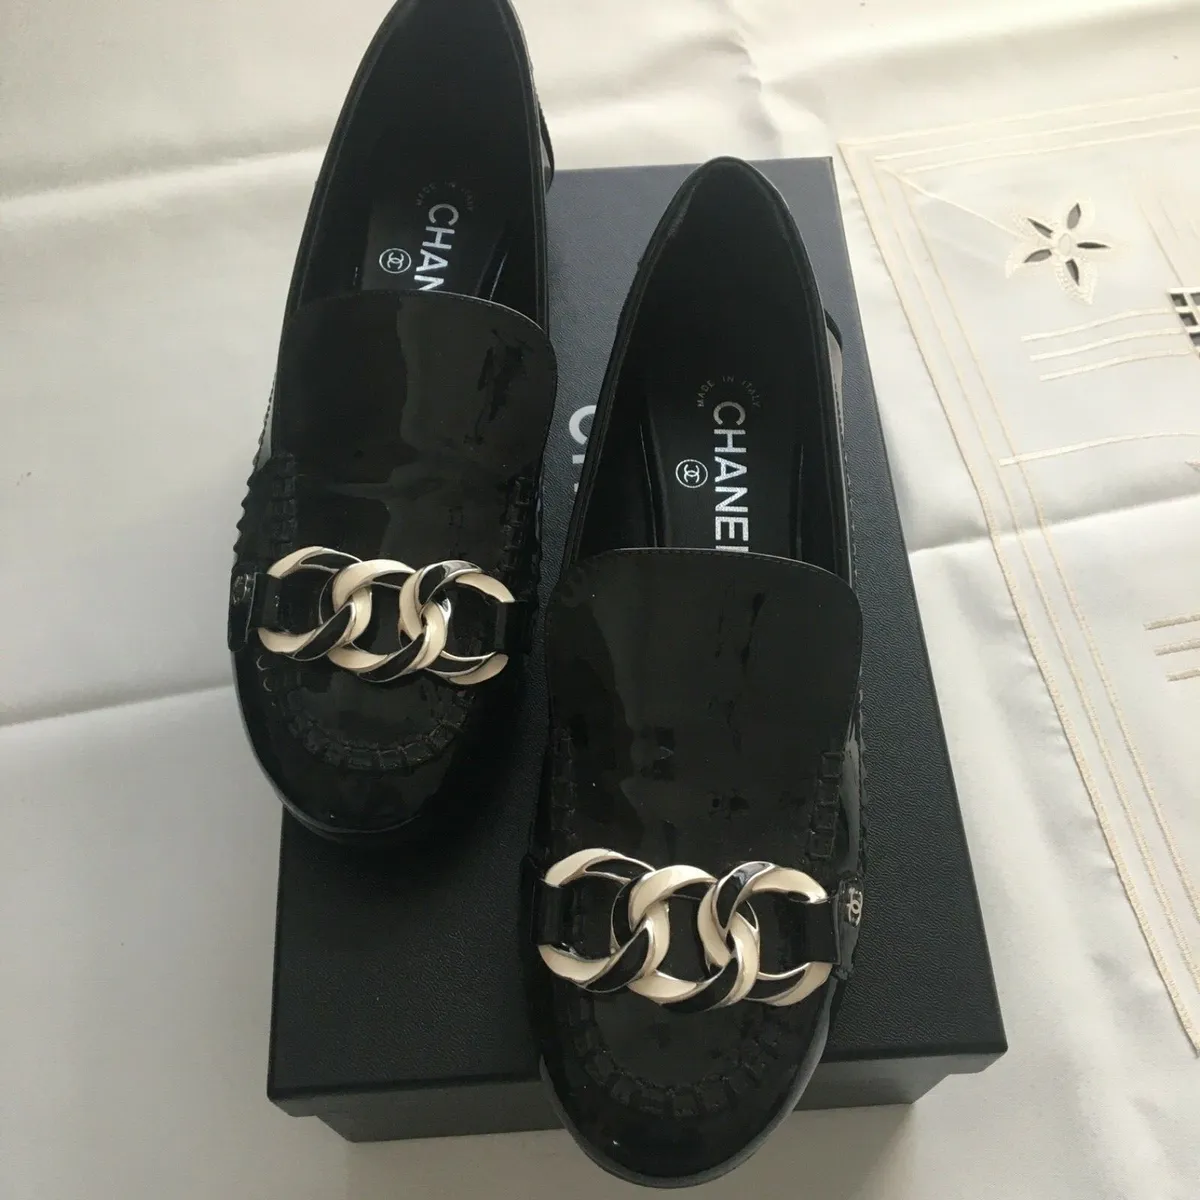 Chanel shoes patten black size 39